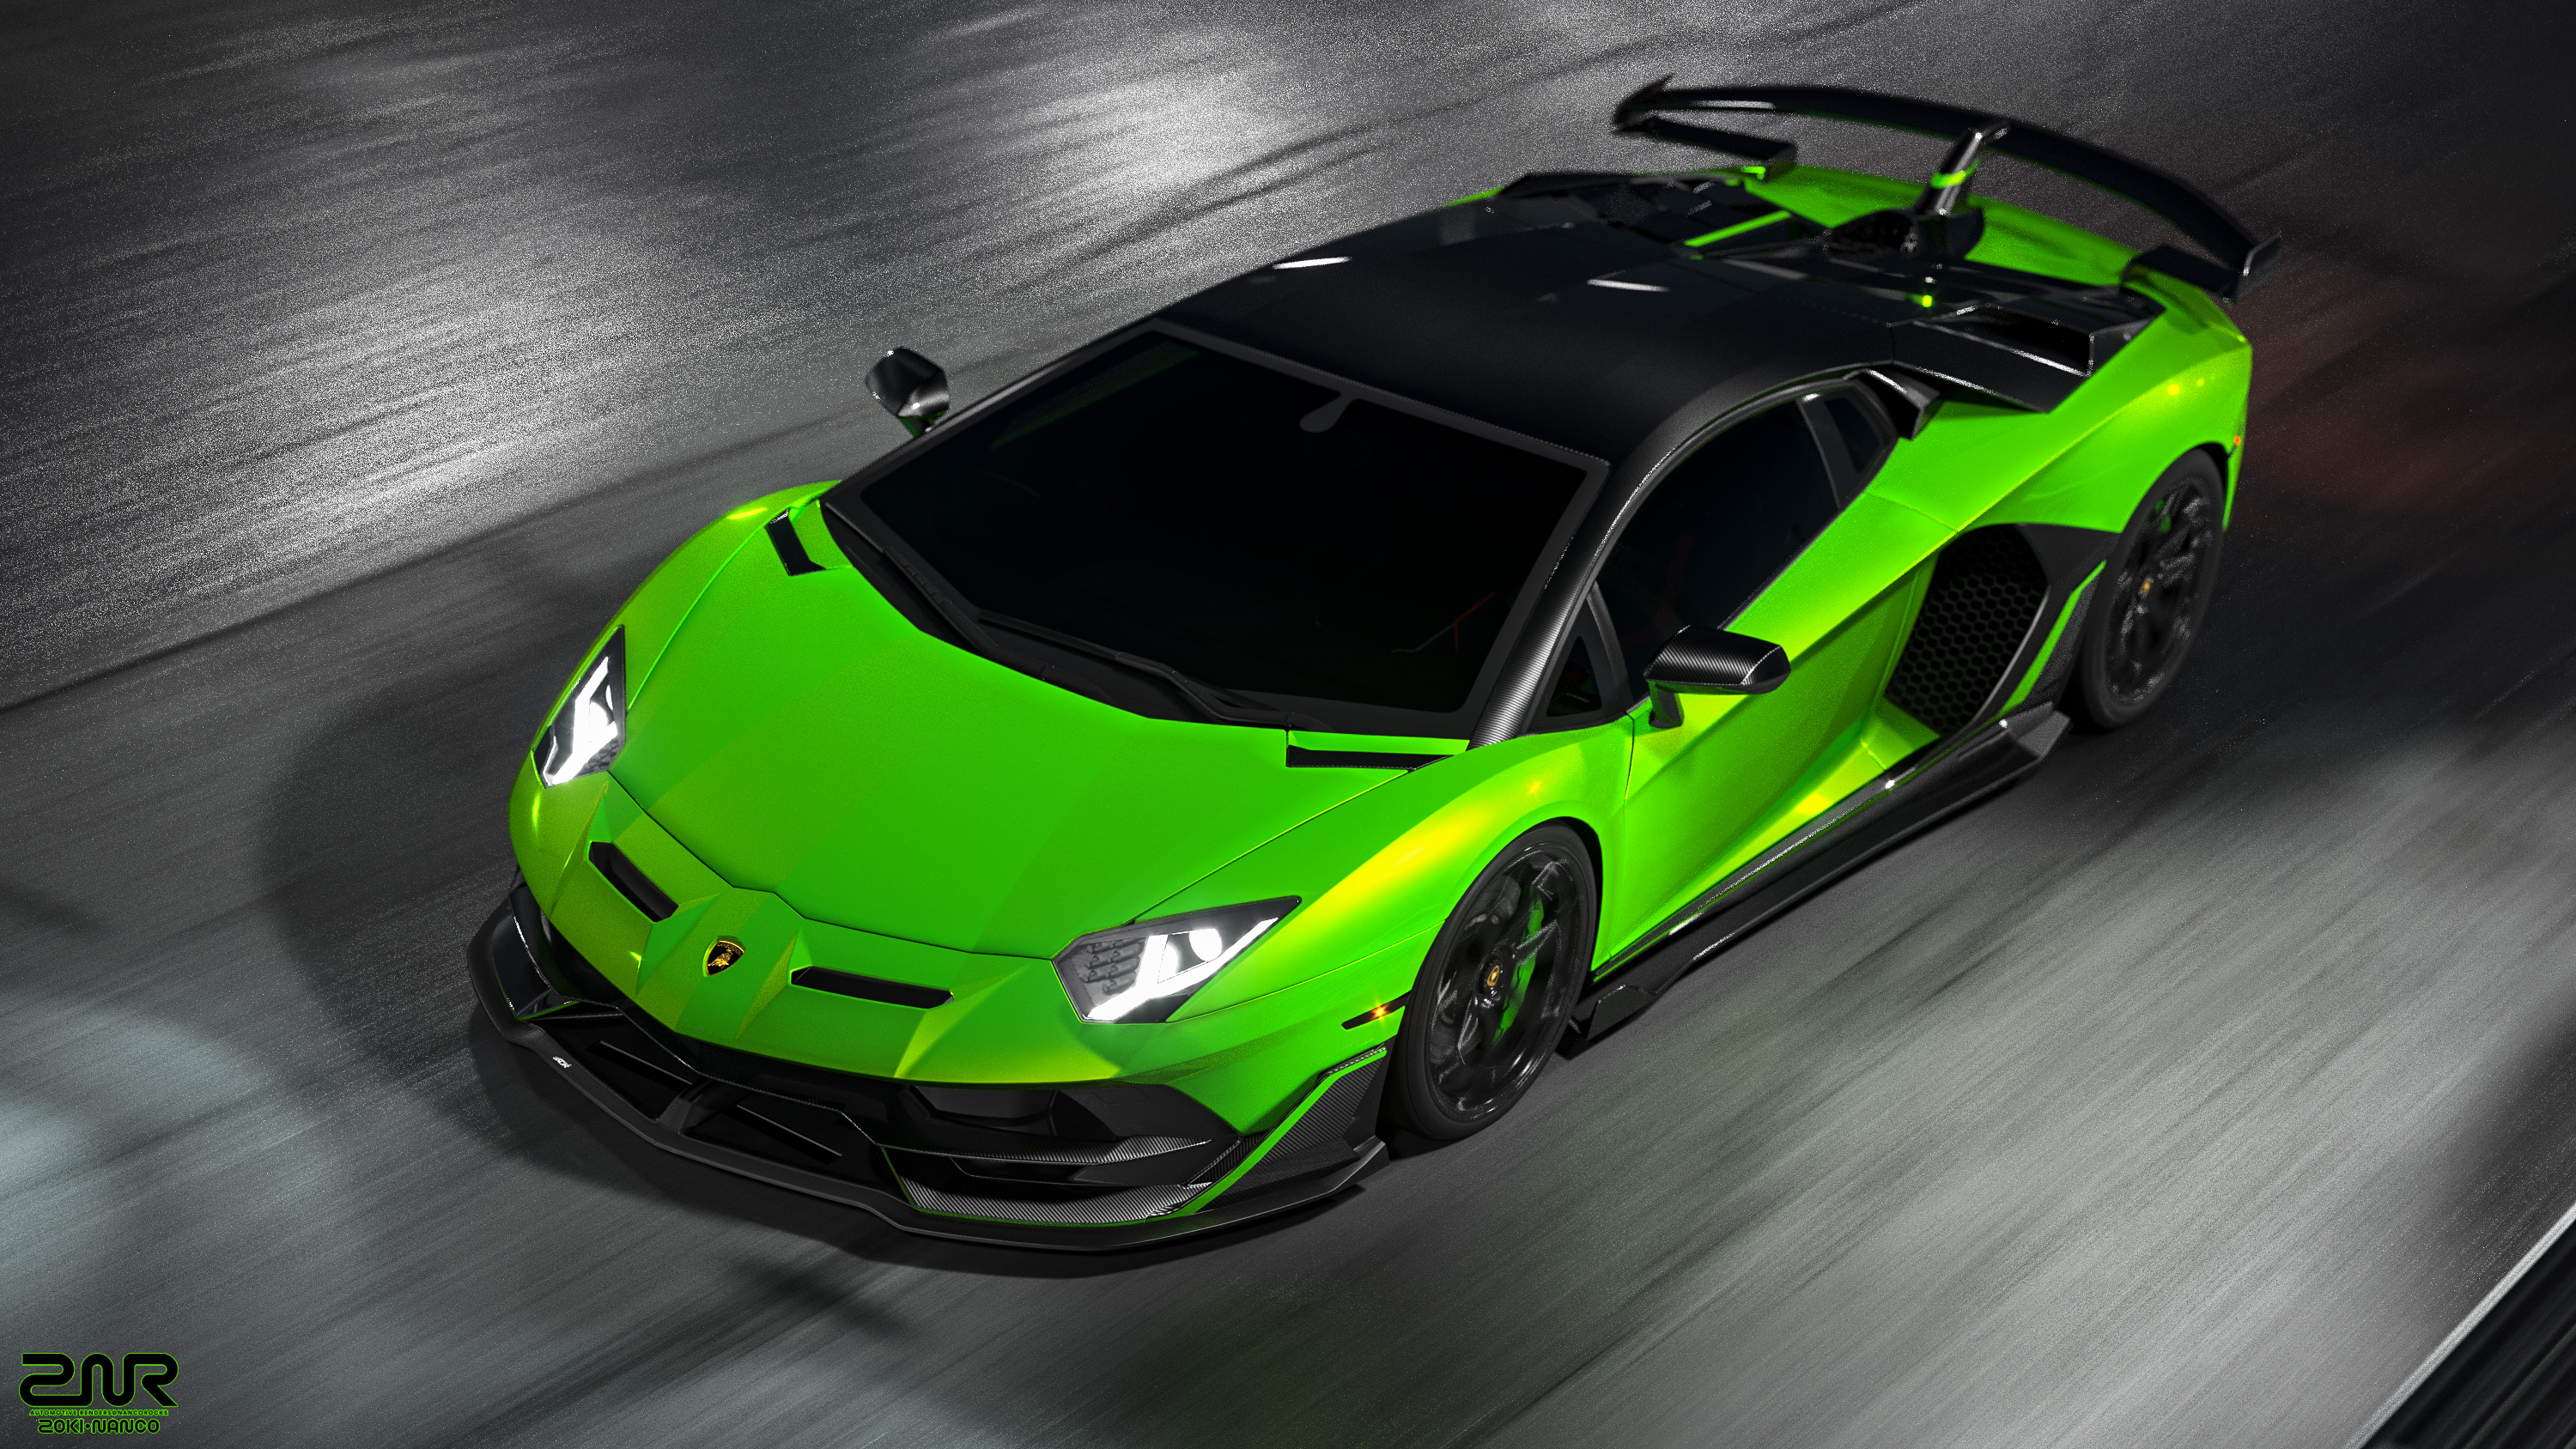 Бесплатное фото Lamborghini Aventador SVJ ярко-зеленого цвета